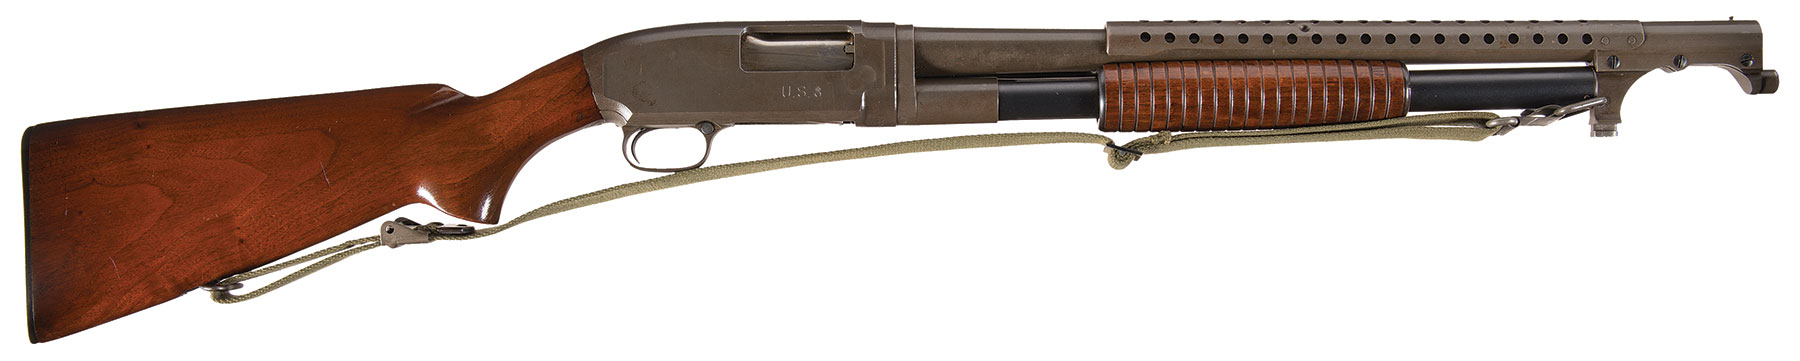 Winchester Model 12 Trench Gun U.S. Contract.